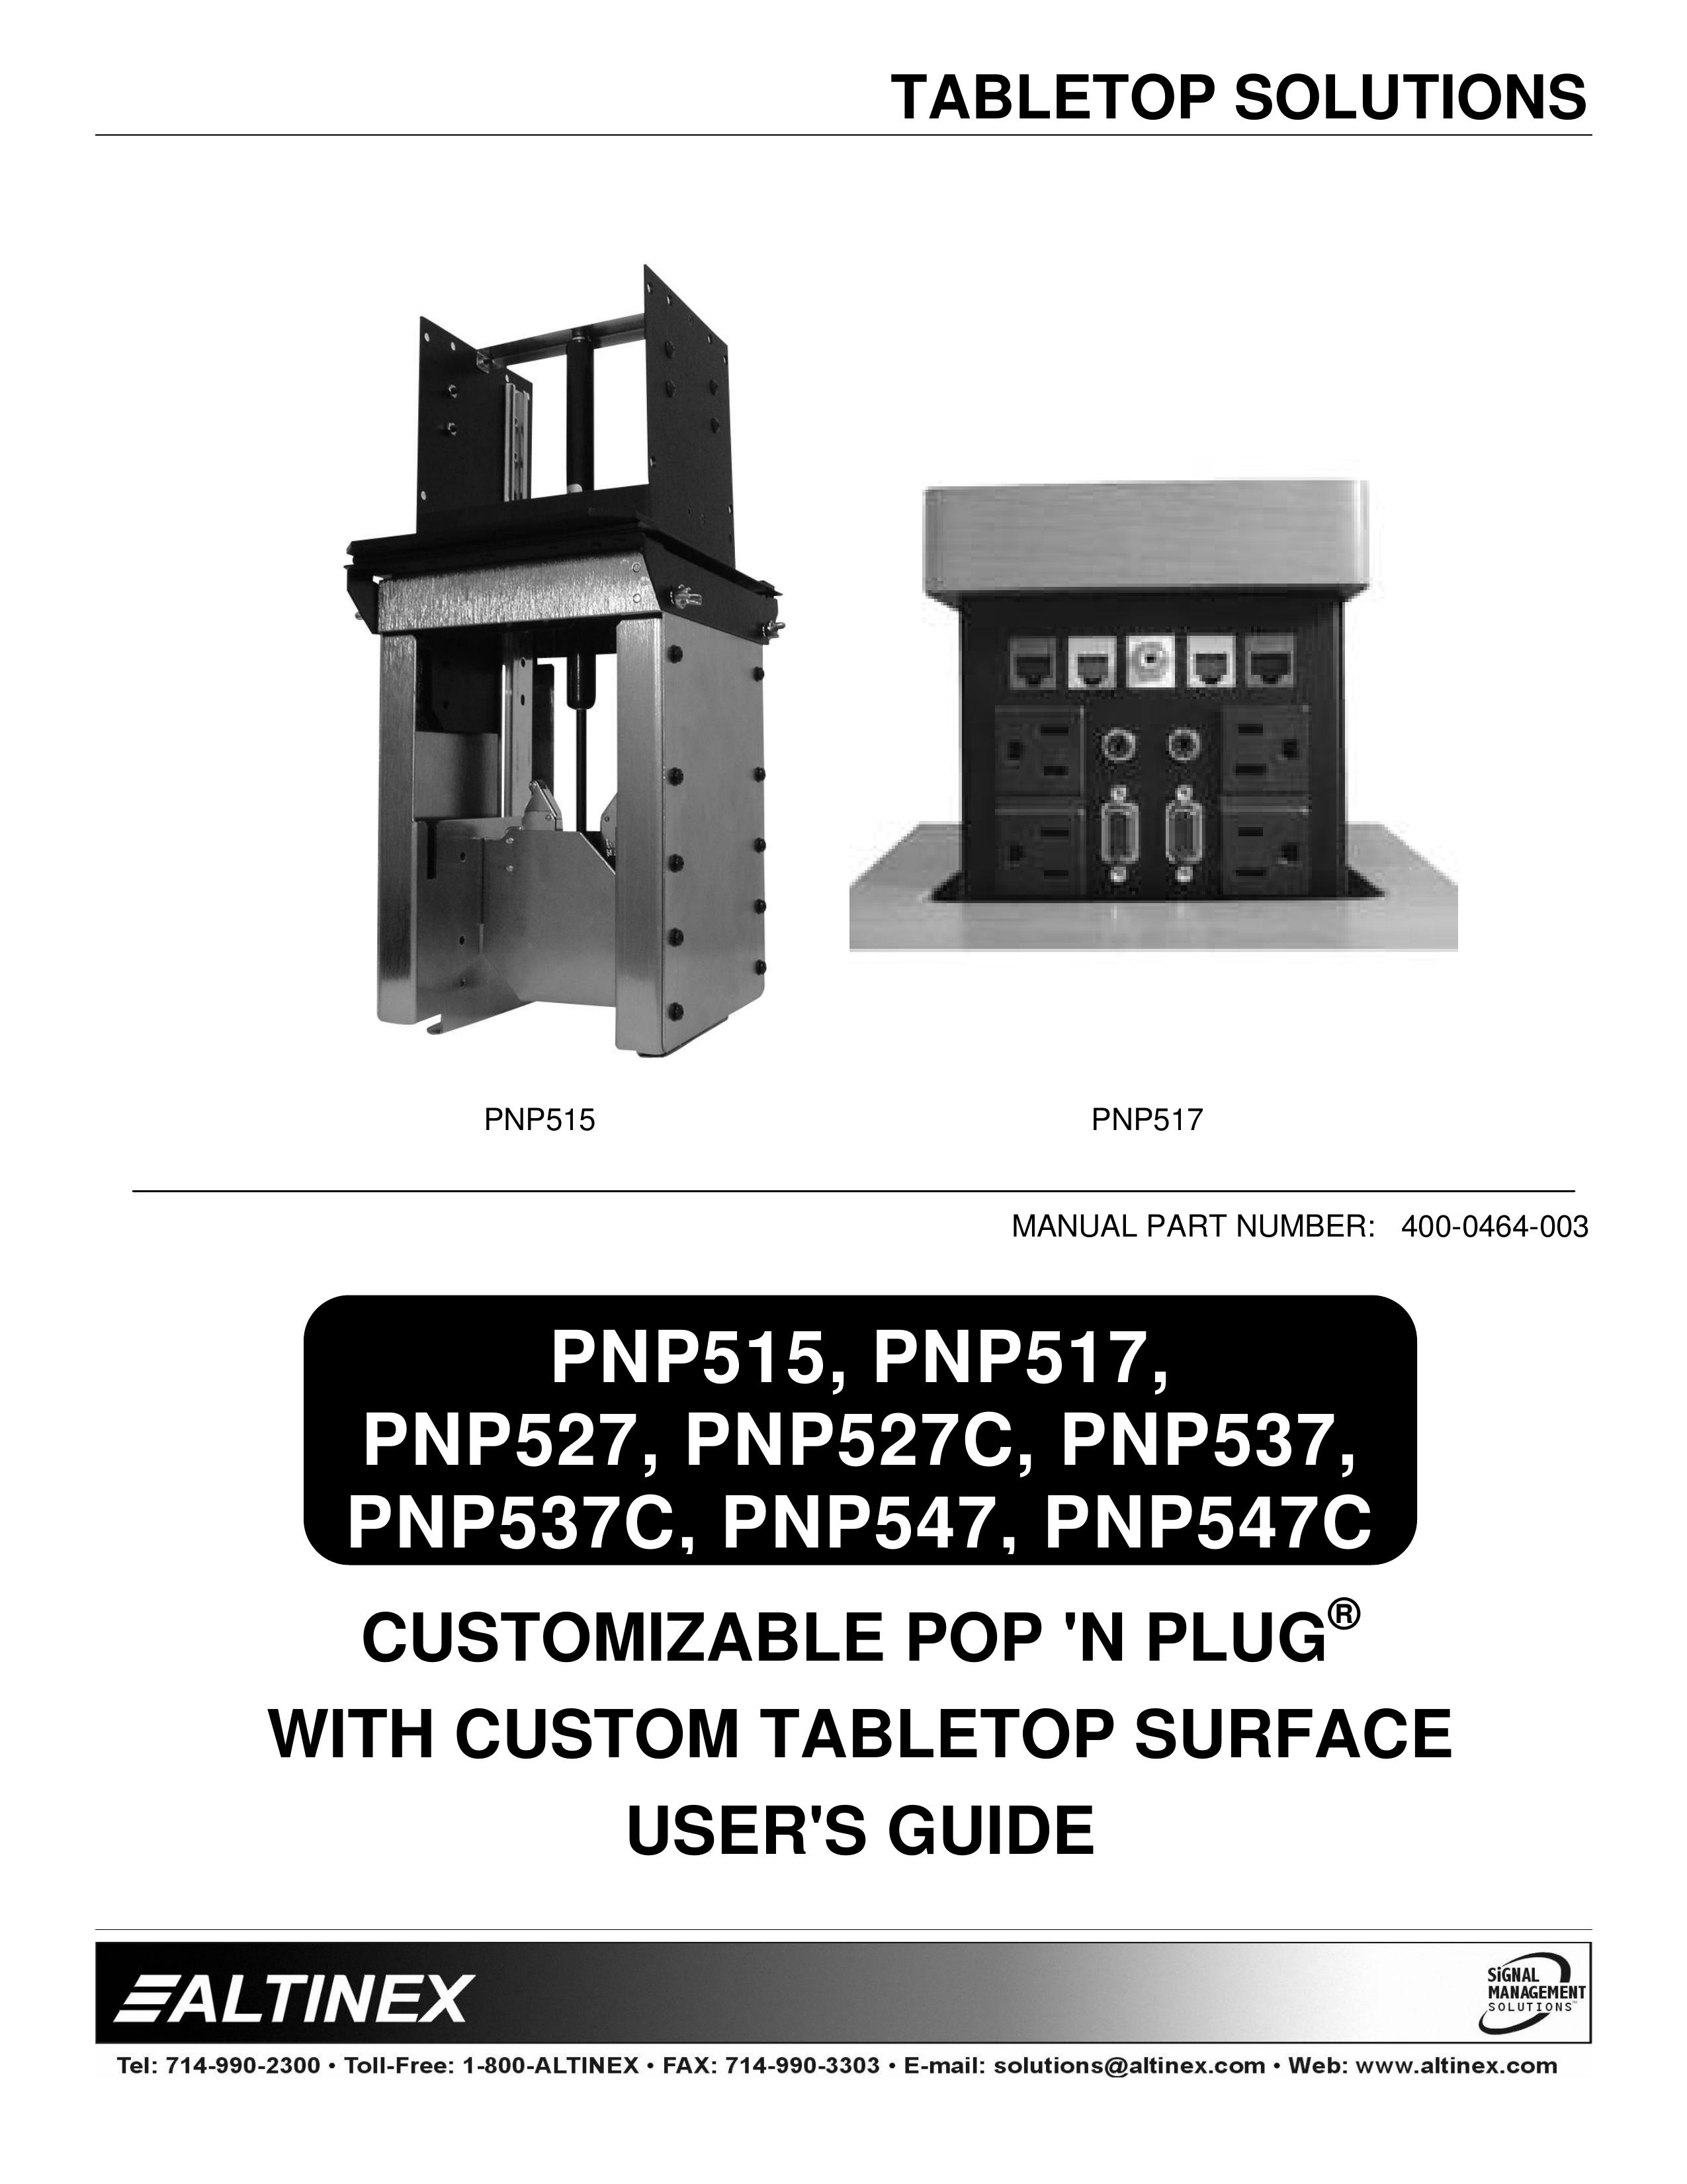 Altinex PNP547C Water Dispenser User Manual